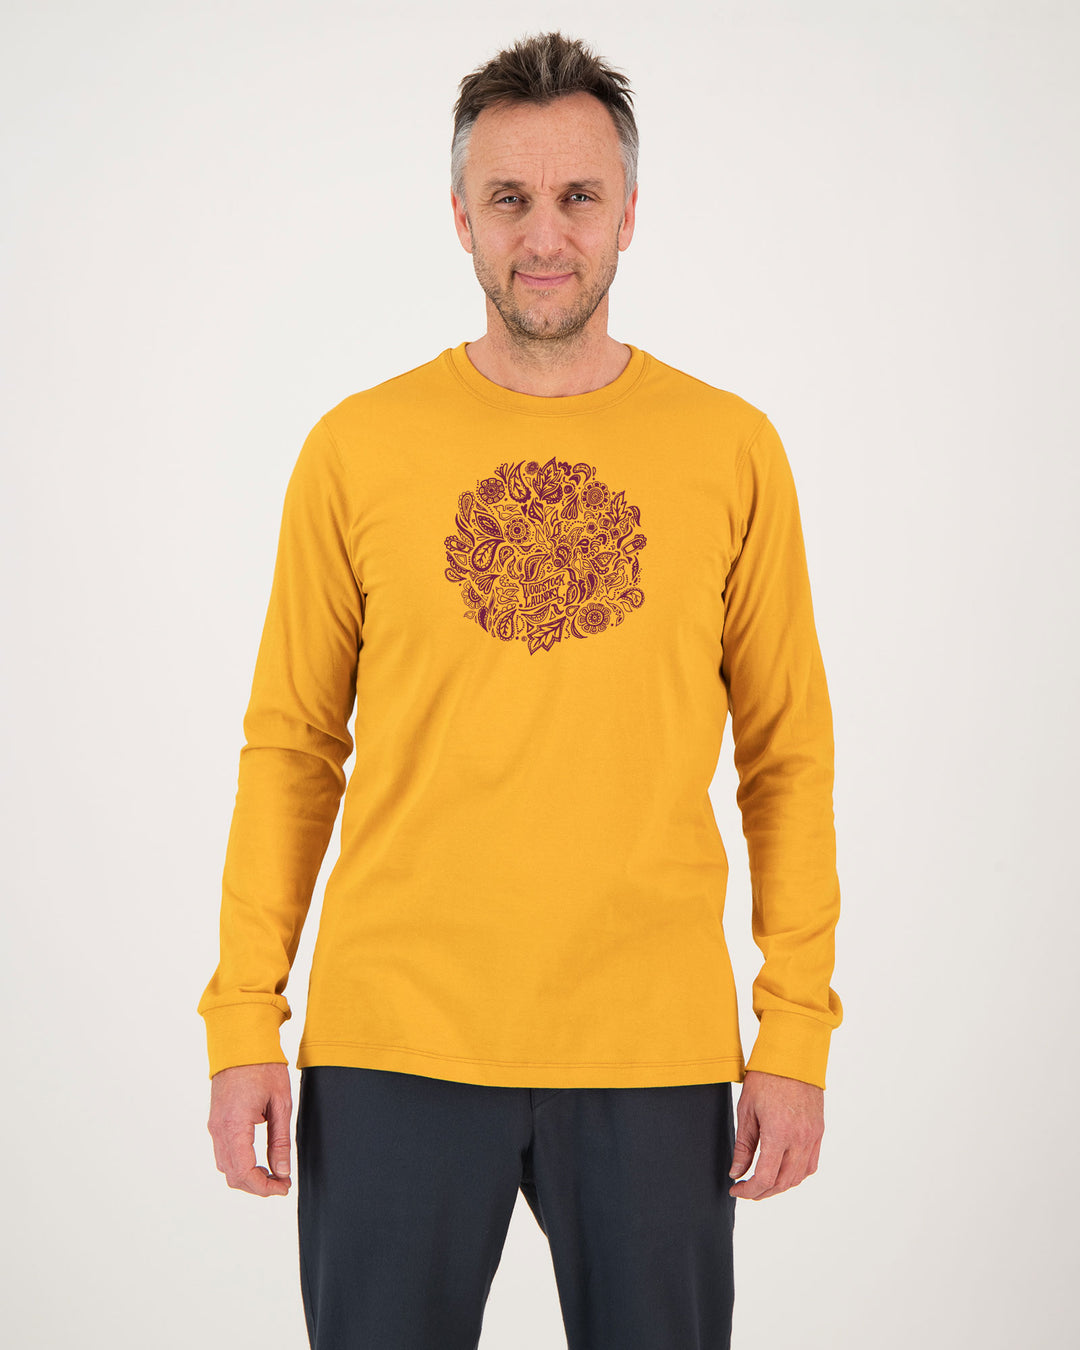 Mens Long-Sleeve Mustard T-Shirt Suzie Q Maroon Front - Woodstock Laundry